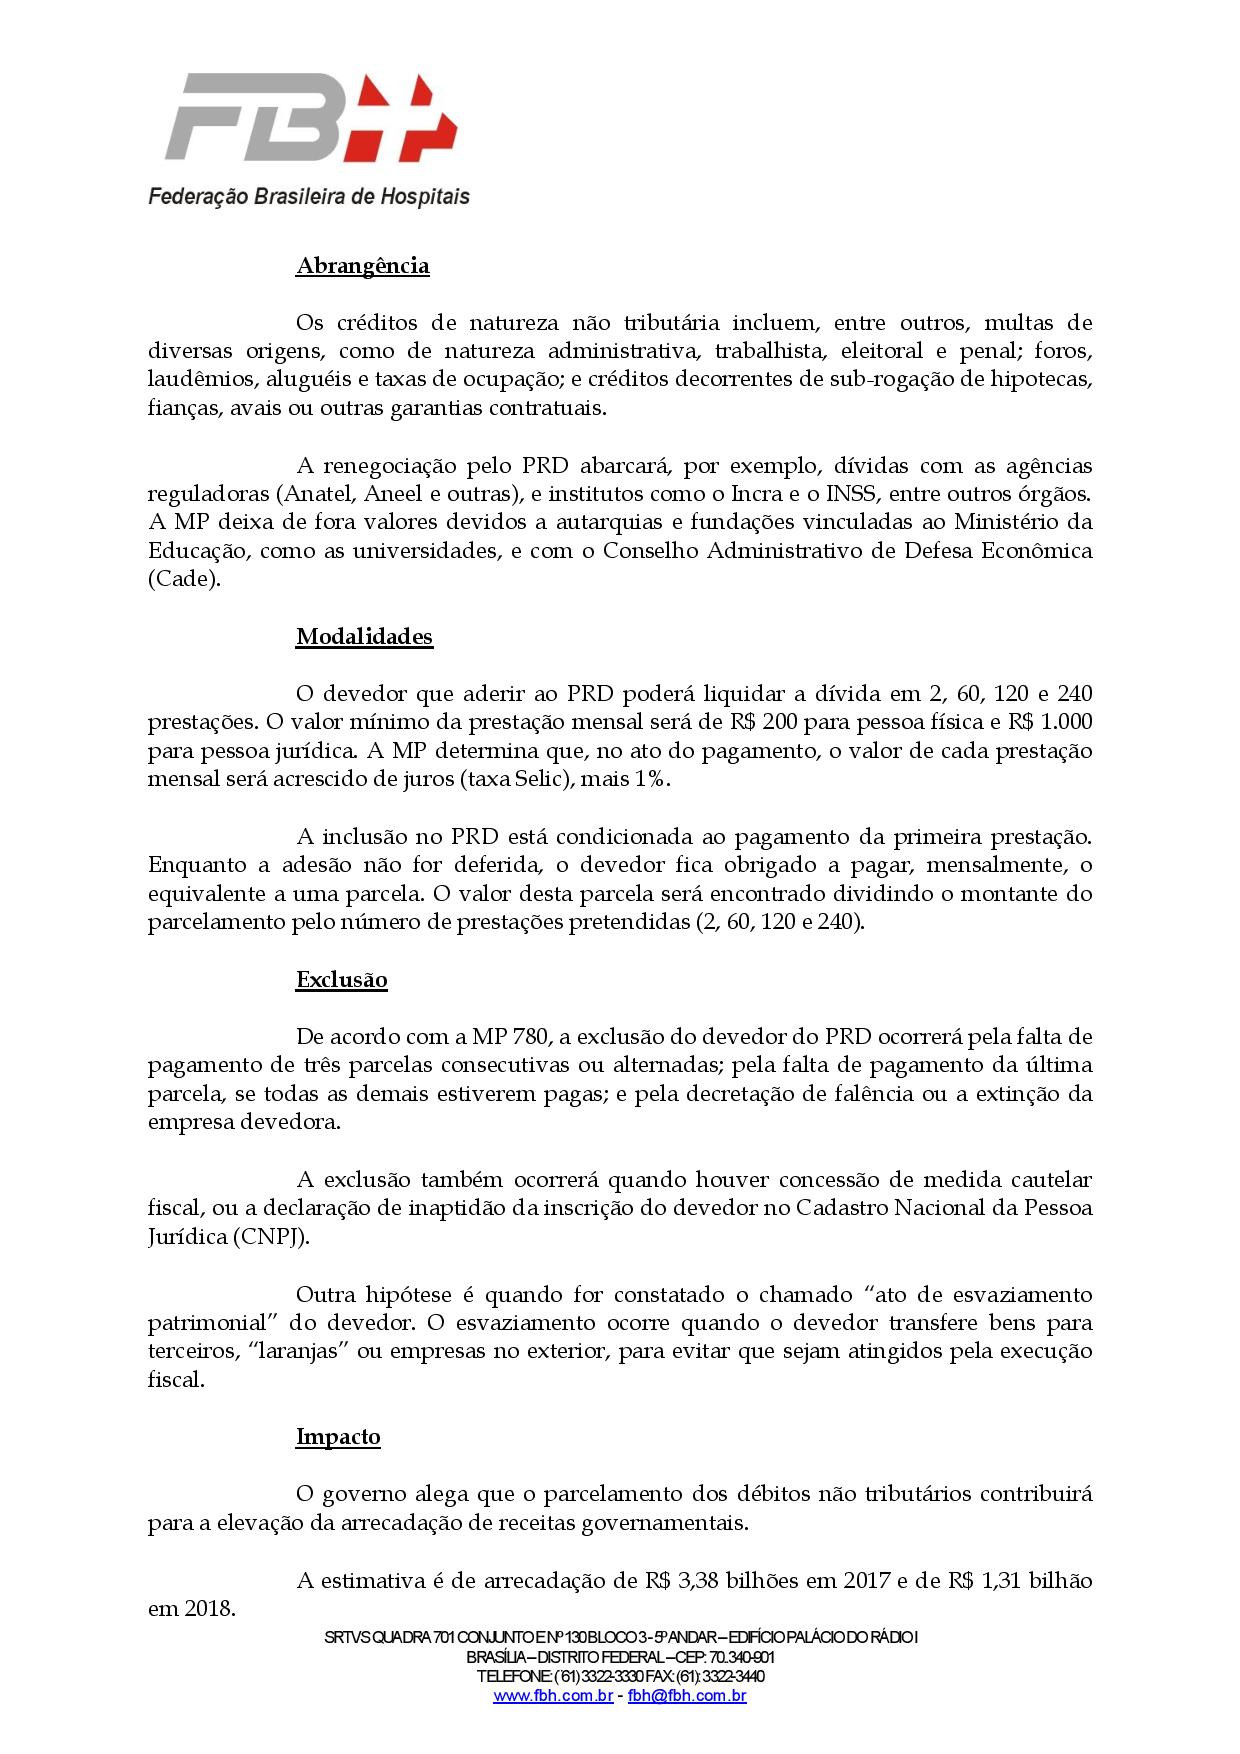 circular-fbh-014-2017-medida-provisoria-780-17-page-002